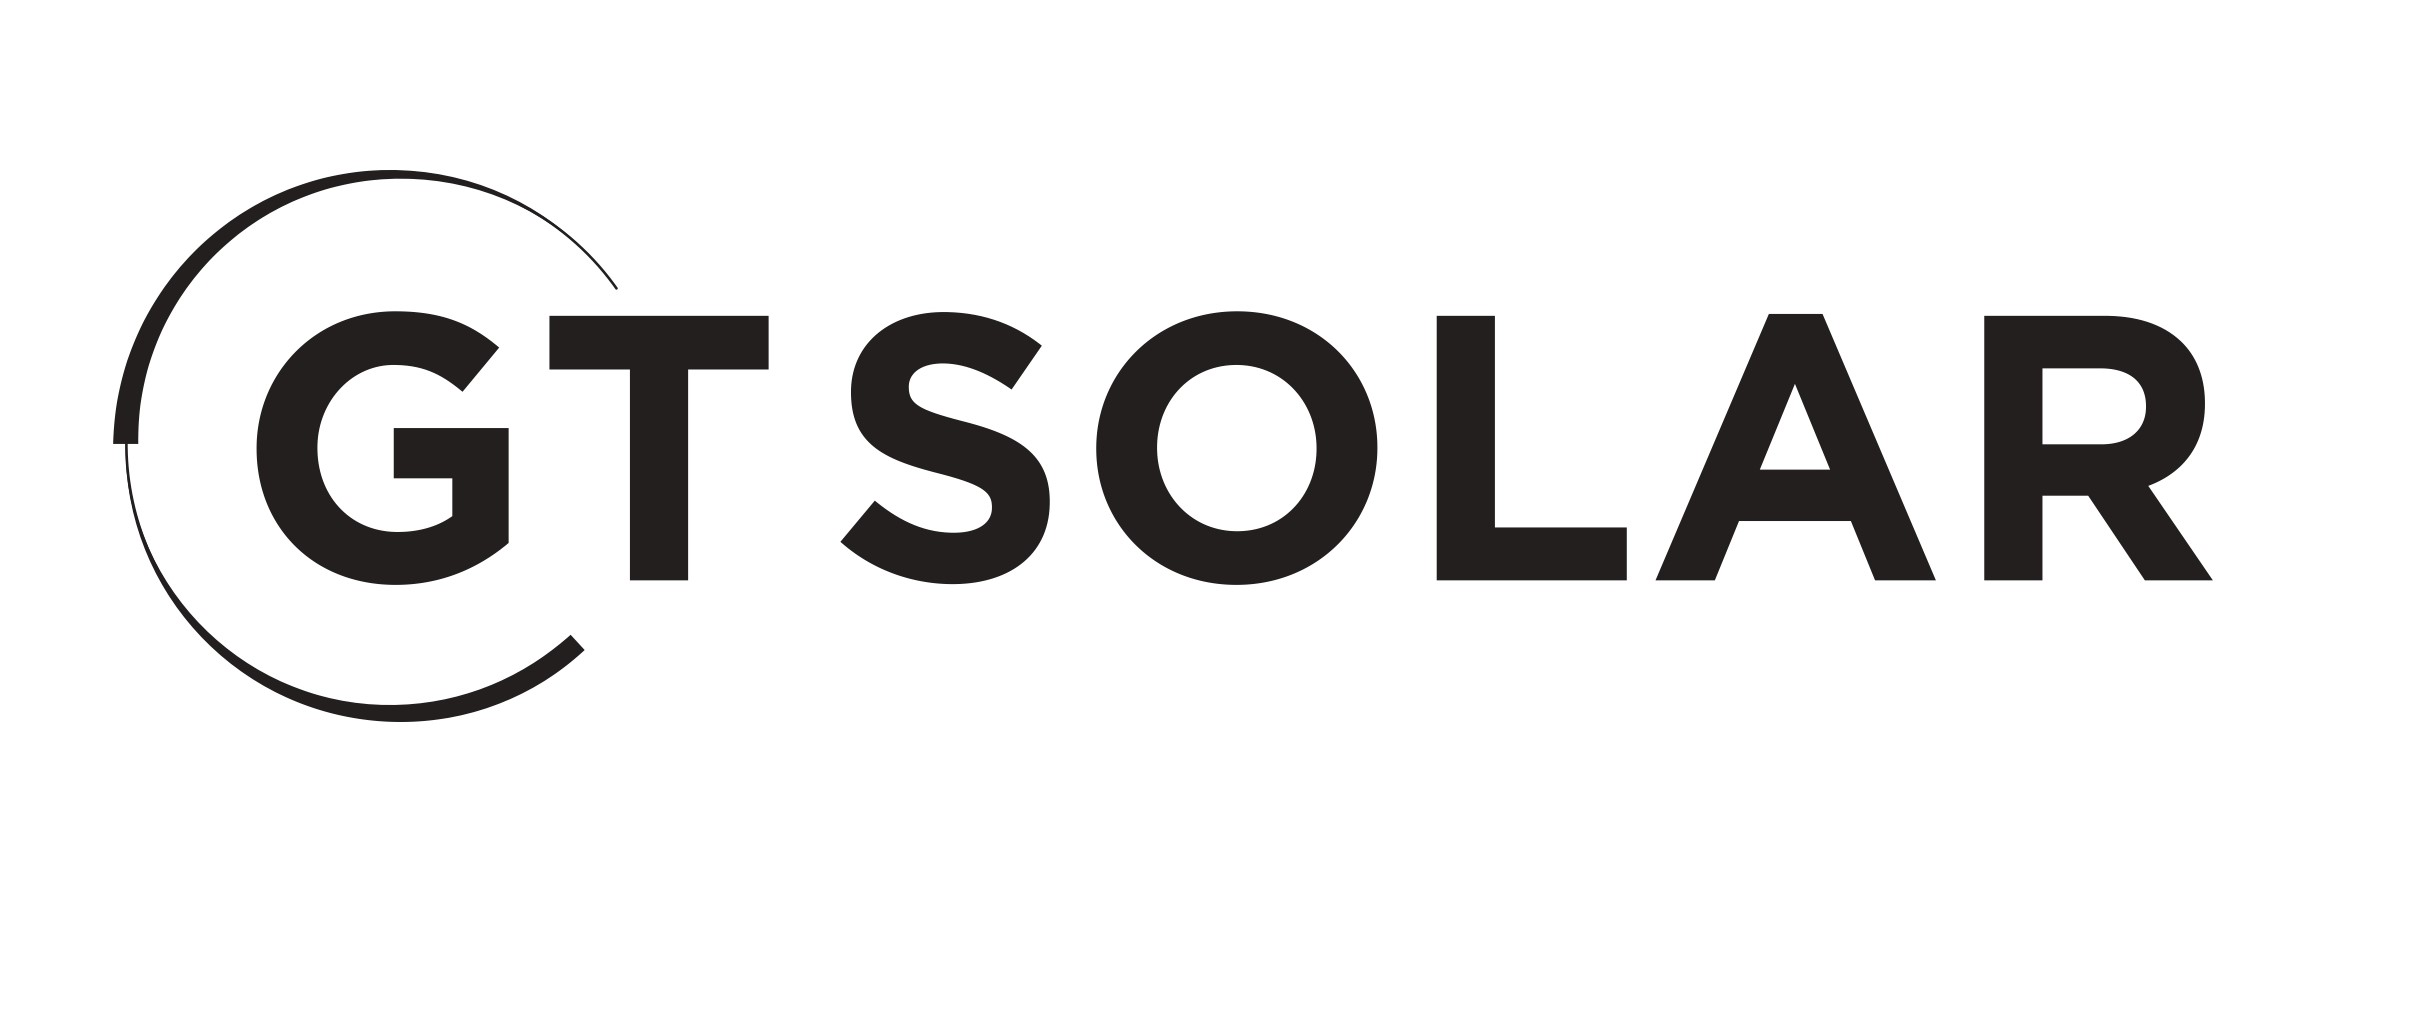 GT Solar